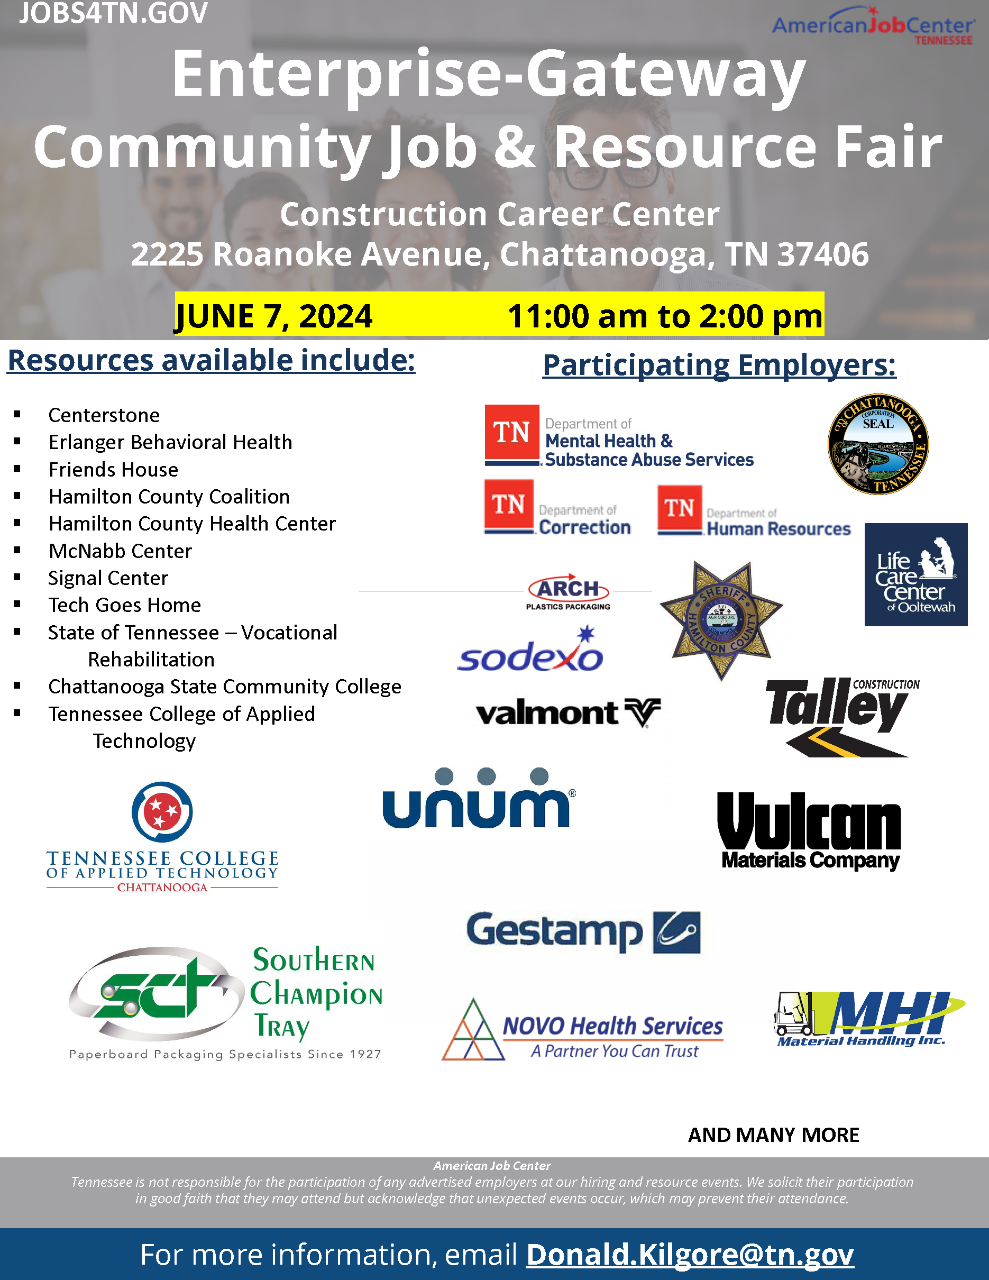 Enterprise-Gateway Community Job & Resource Fair in Chattanooga is June 7, 2024